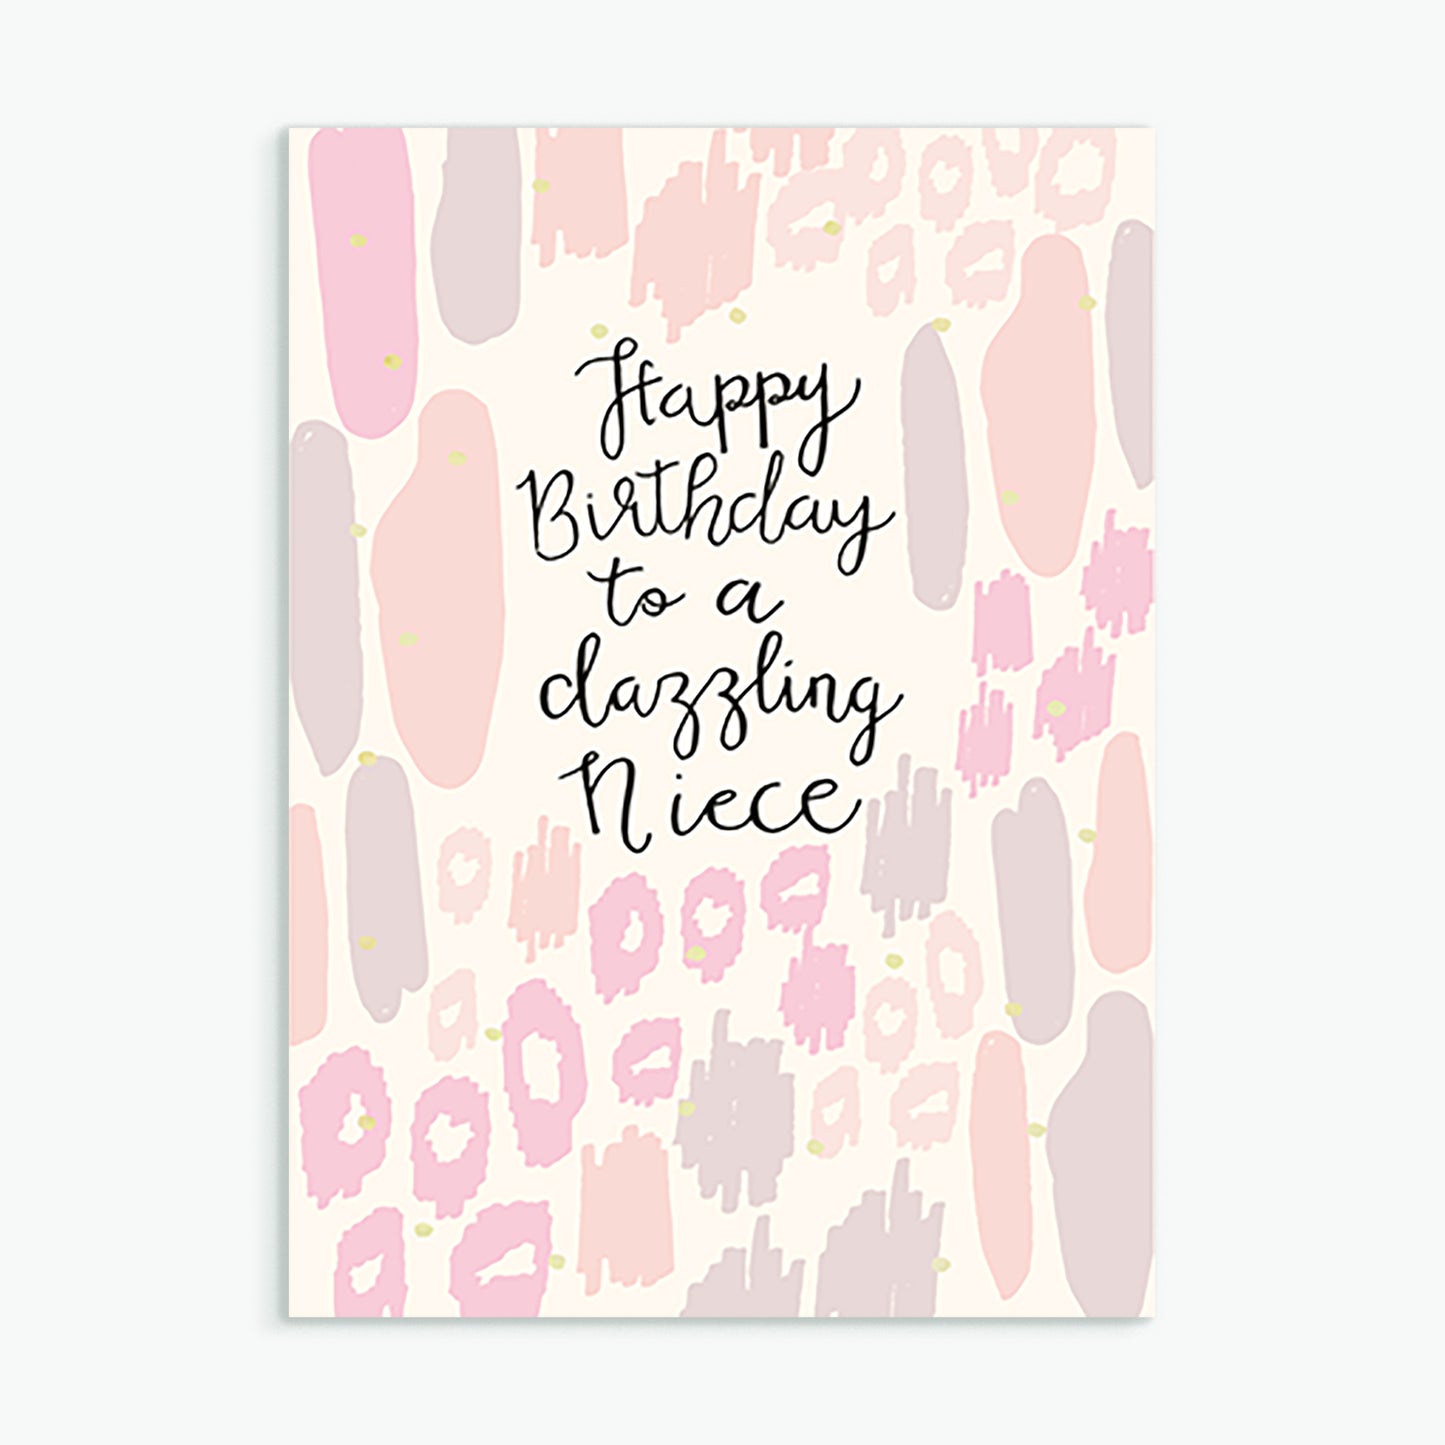 'Dazzling Niece' Birthday Card & Envelope